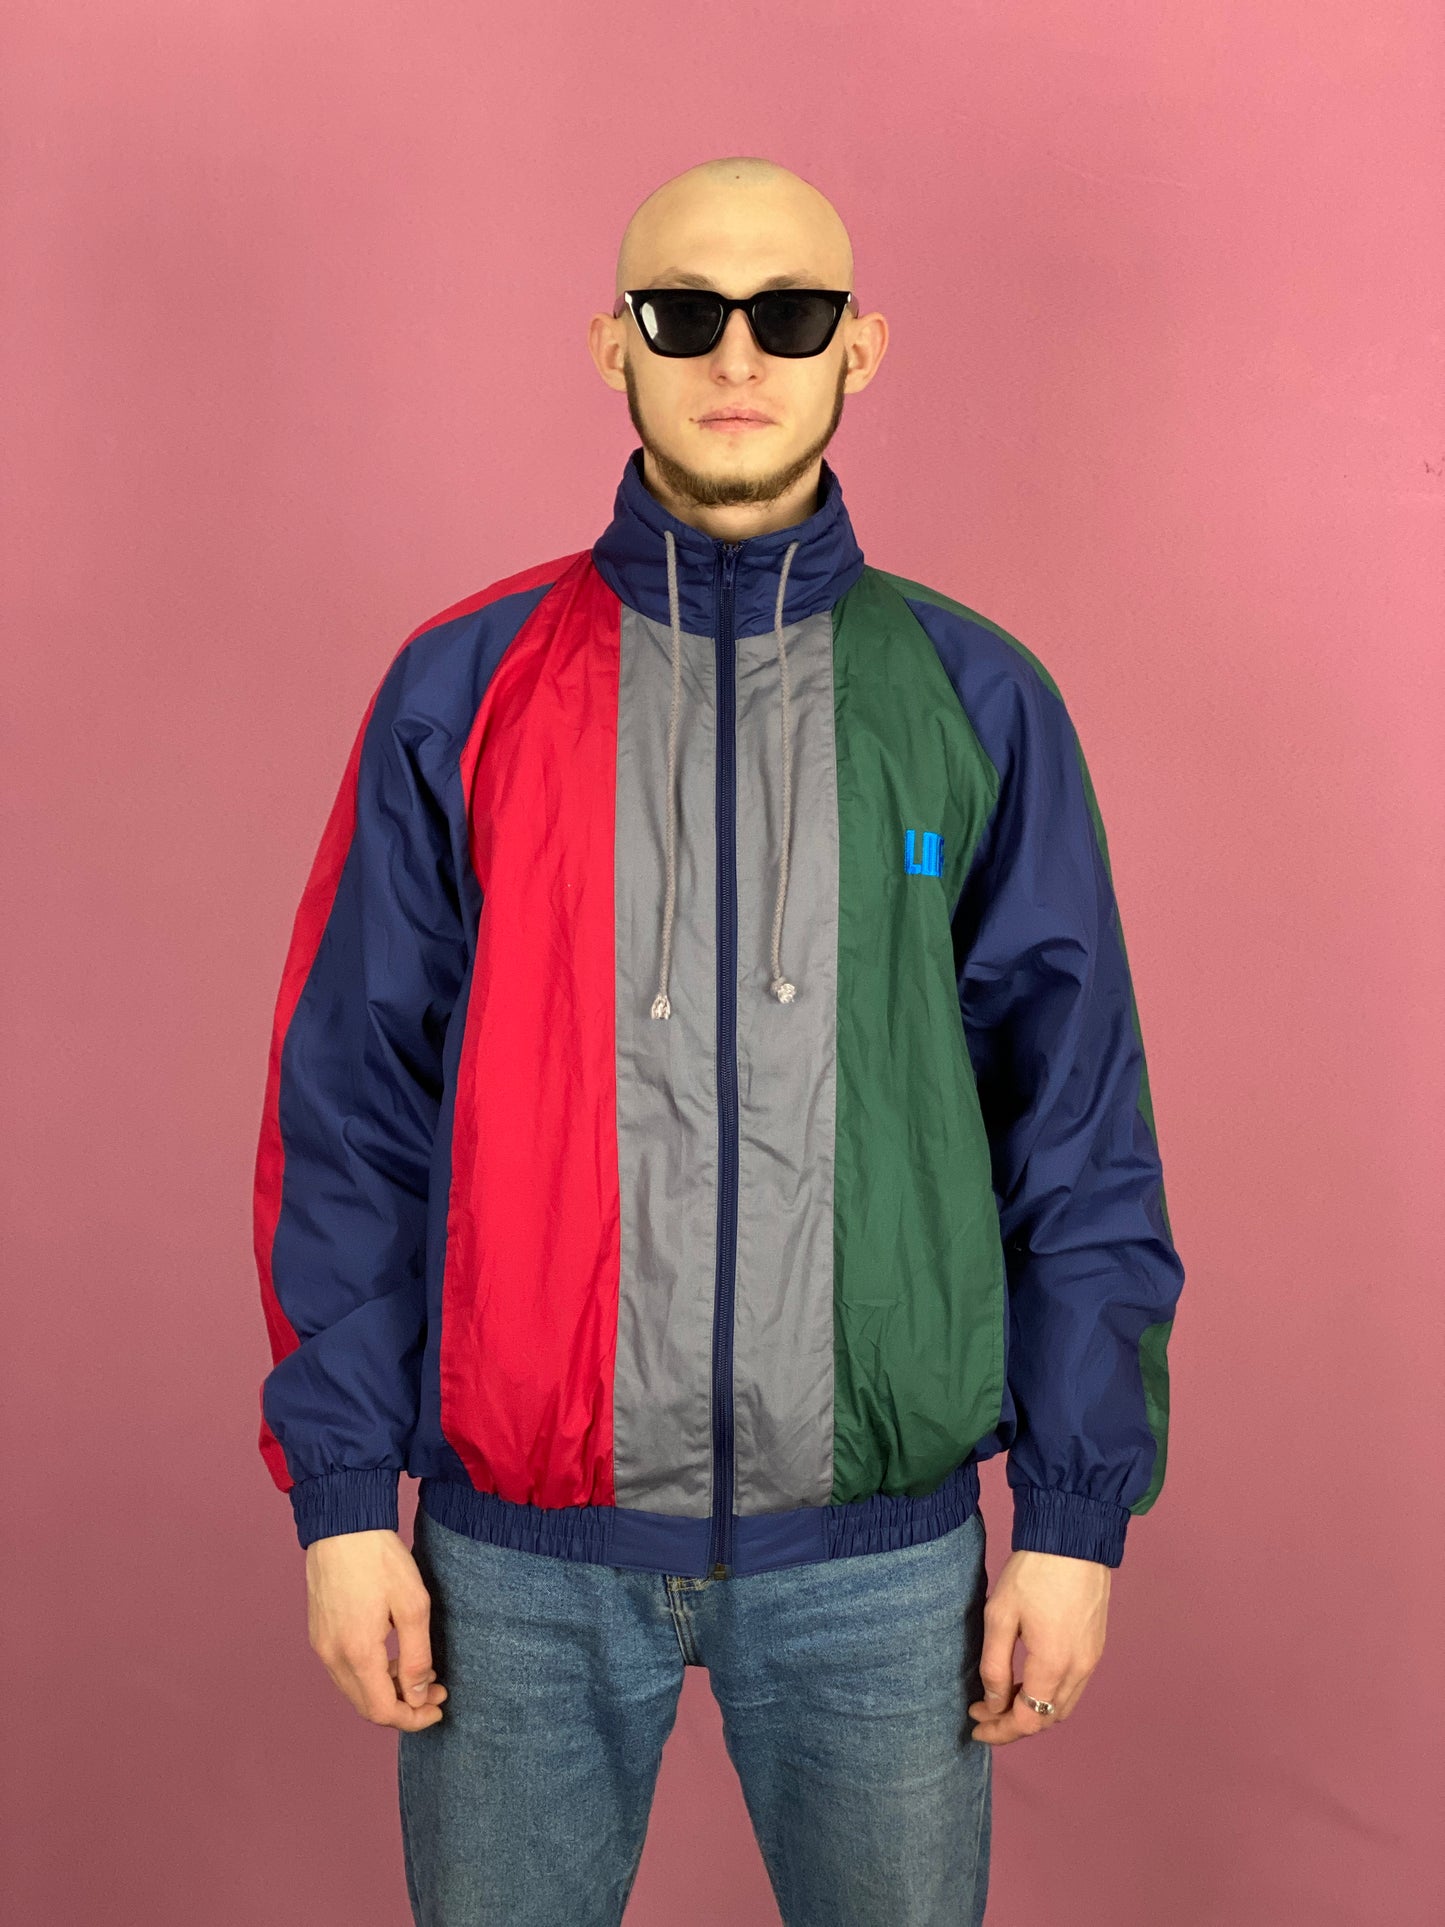 90s Vintage Men's Windbreaker Jacket - XL Multicolor Polyester Blend